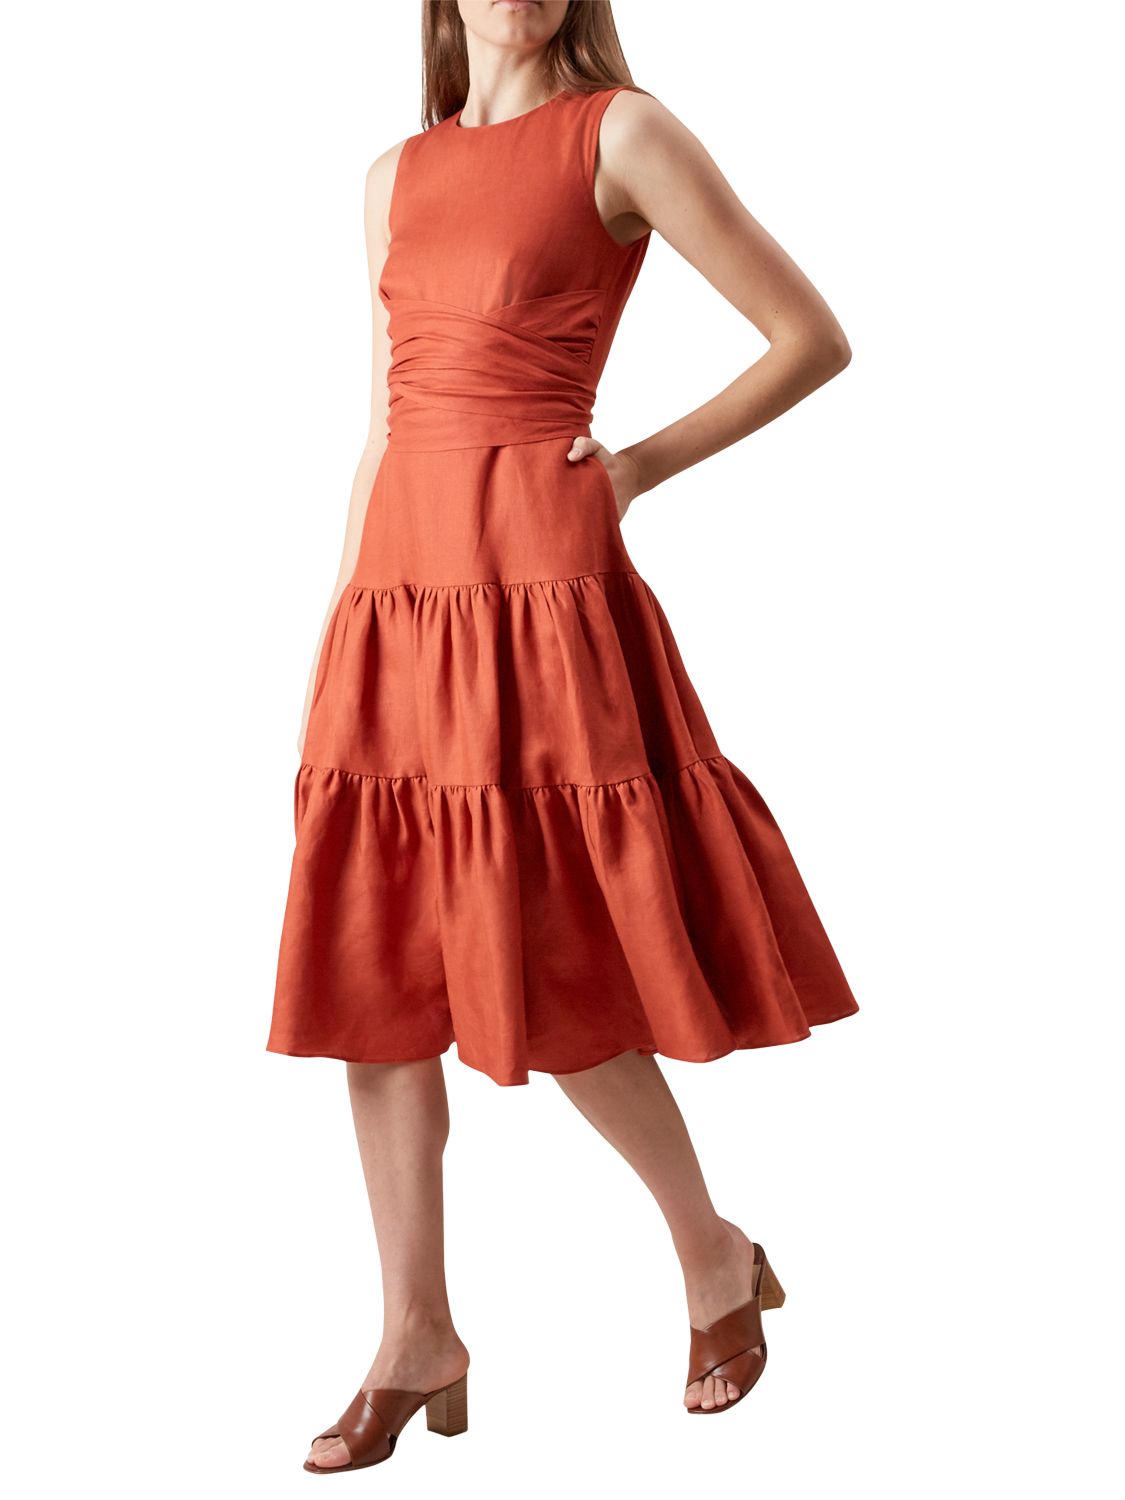 Hobbs Seville Dress, Cayenne Red, 6